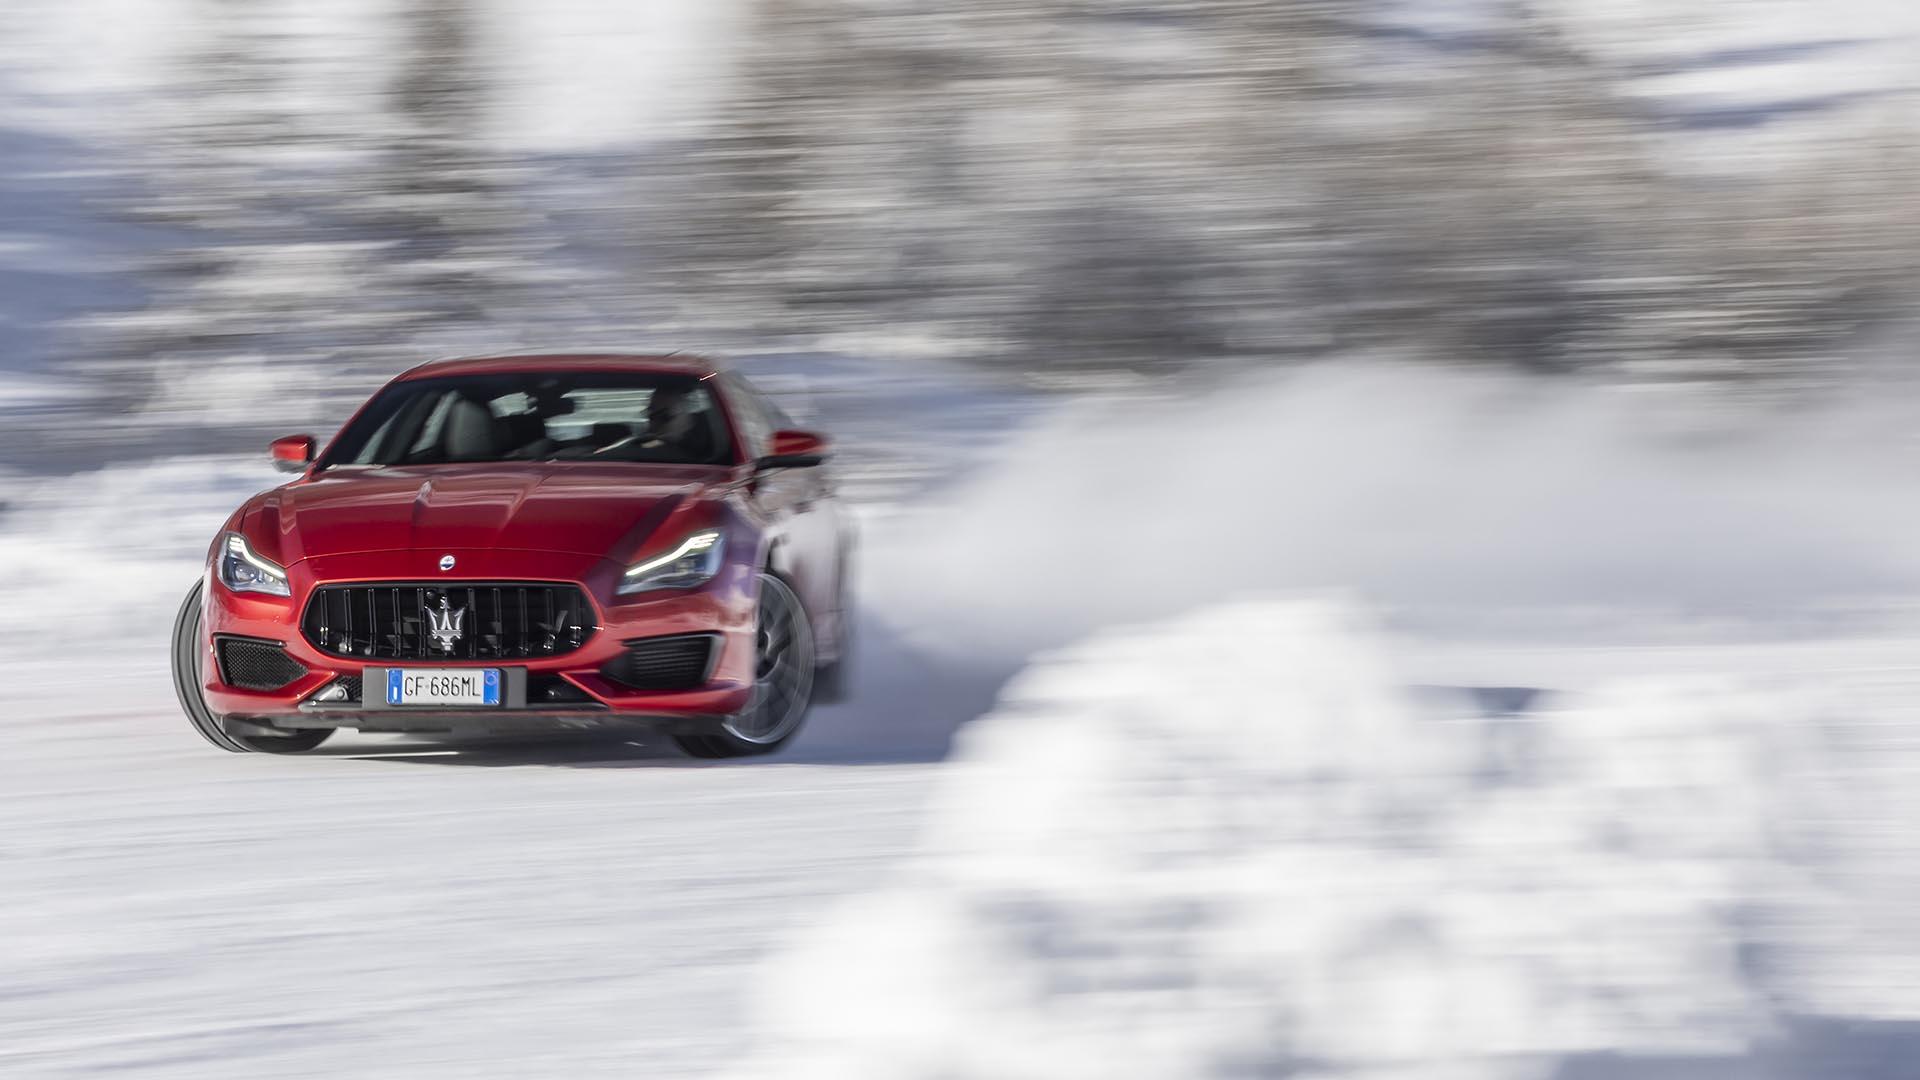 TopGear Magazine 224 inhoud: afscheid Maserati V8 in de sneeuw